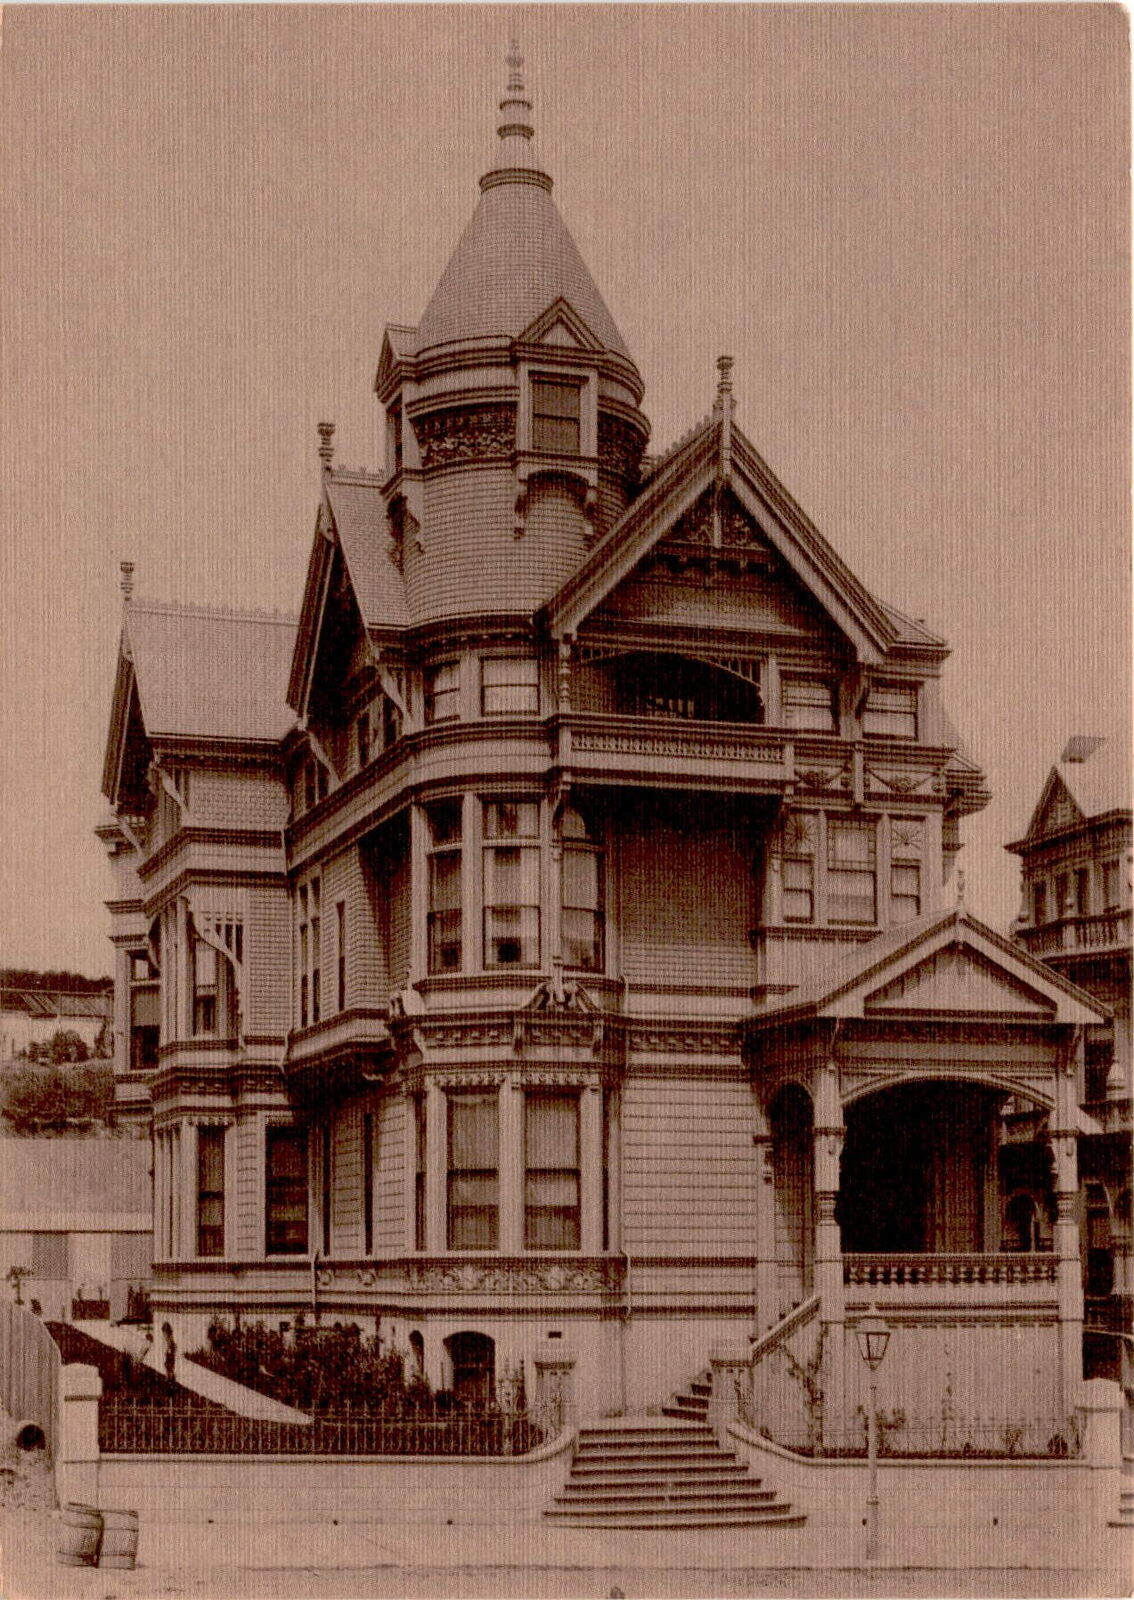 Vintage postcard of Wm. Haas Residence, San Francisco